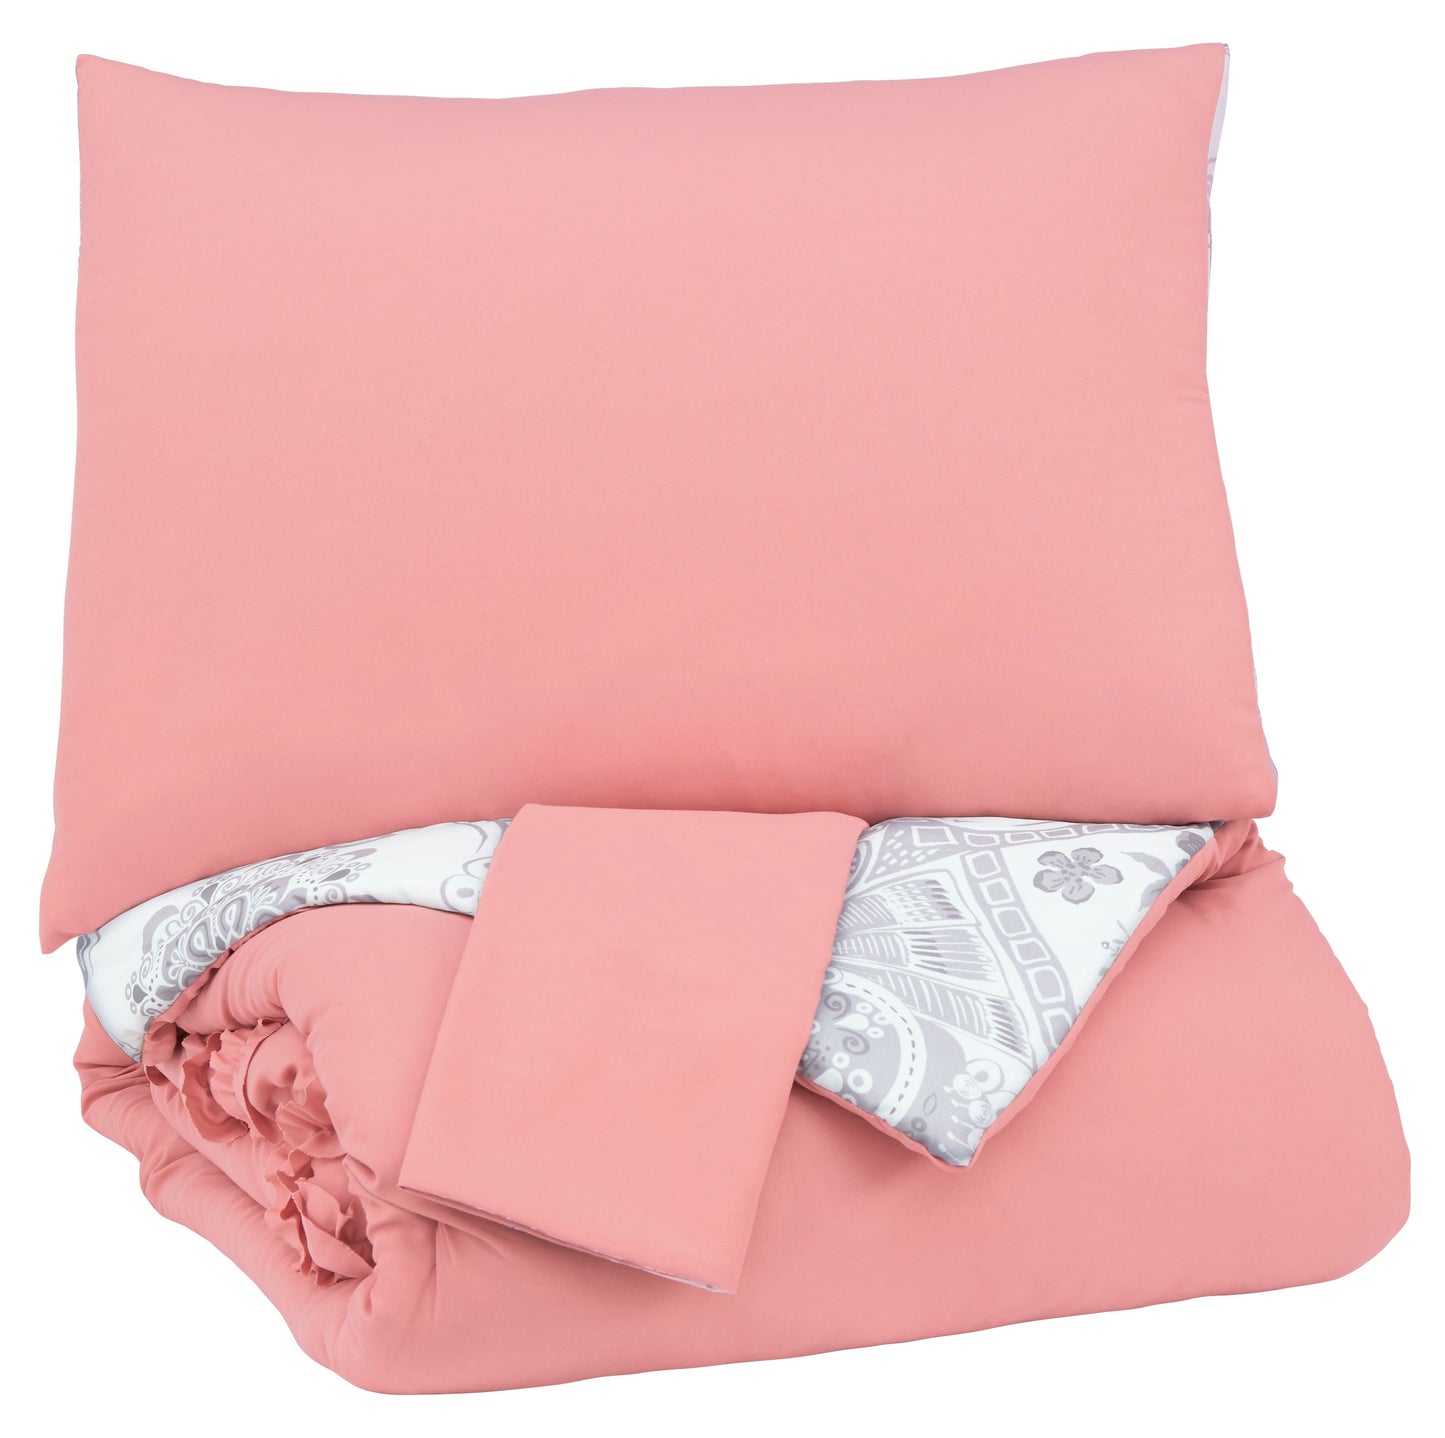 Avaleigh - Comforter Set